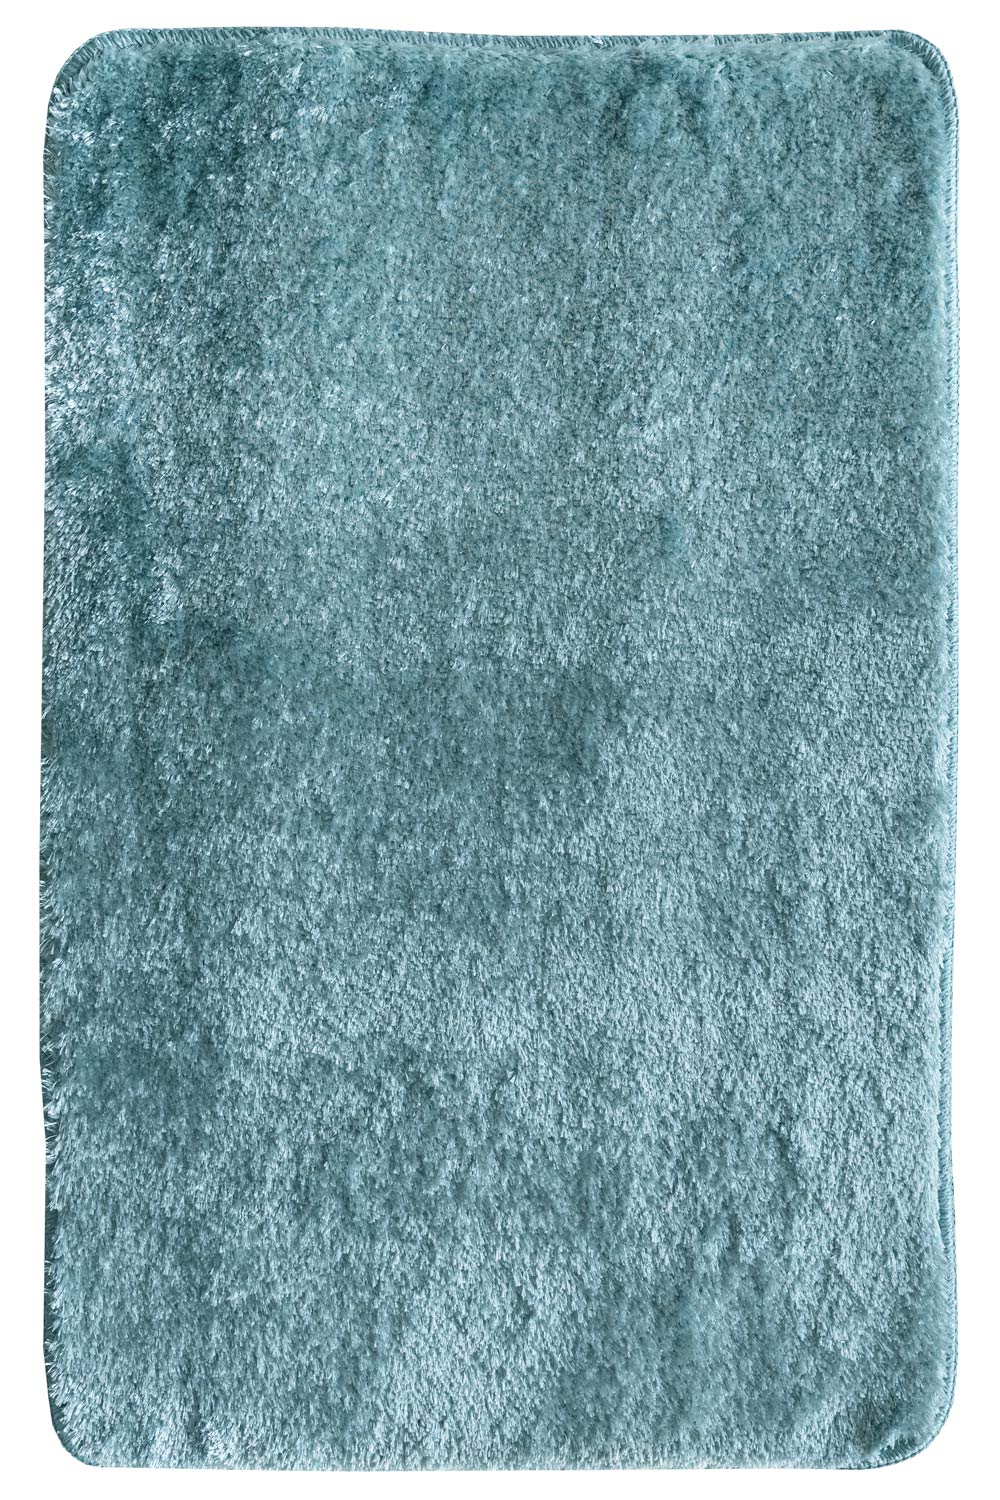 Koupelnová předložka SANTA/NORVOS - Turquoise 50x80 cm